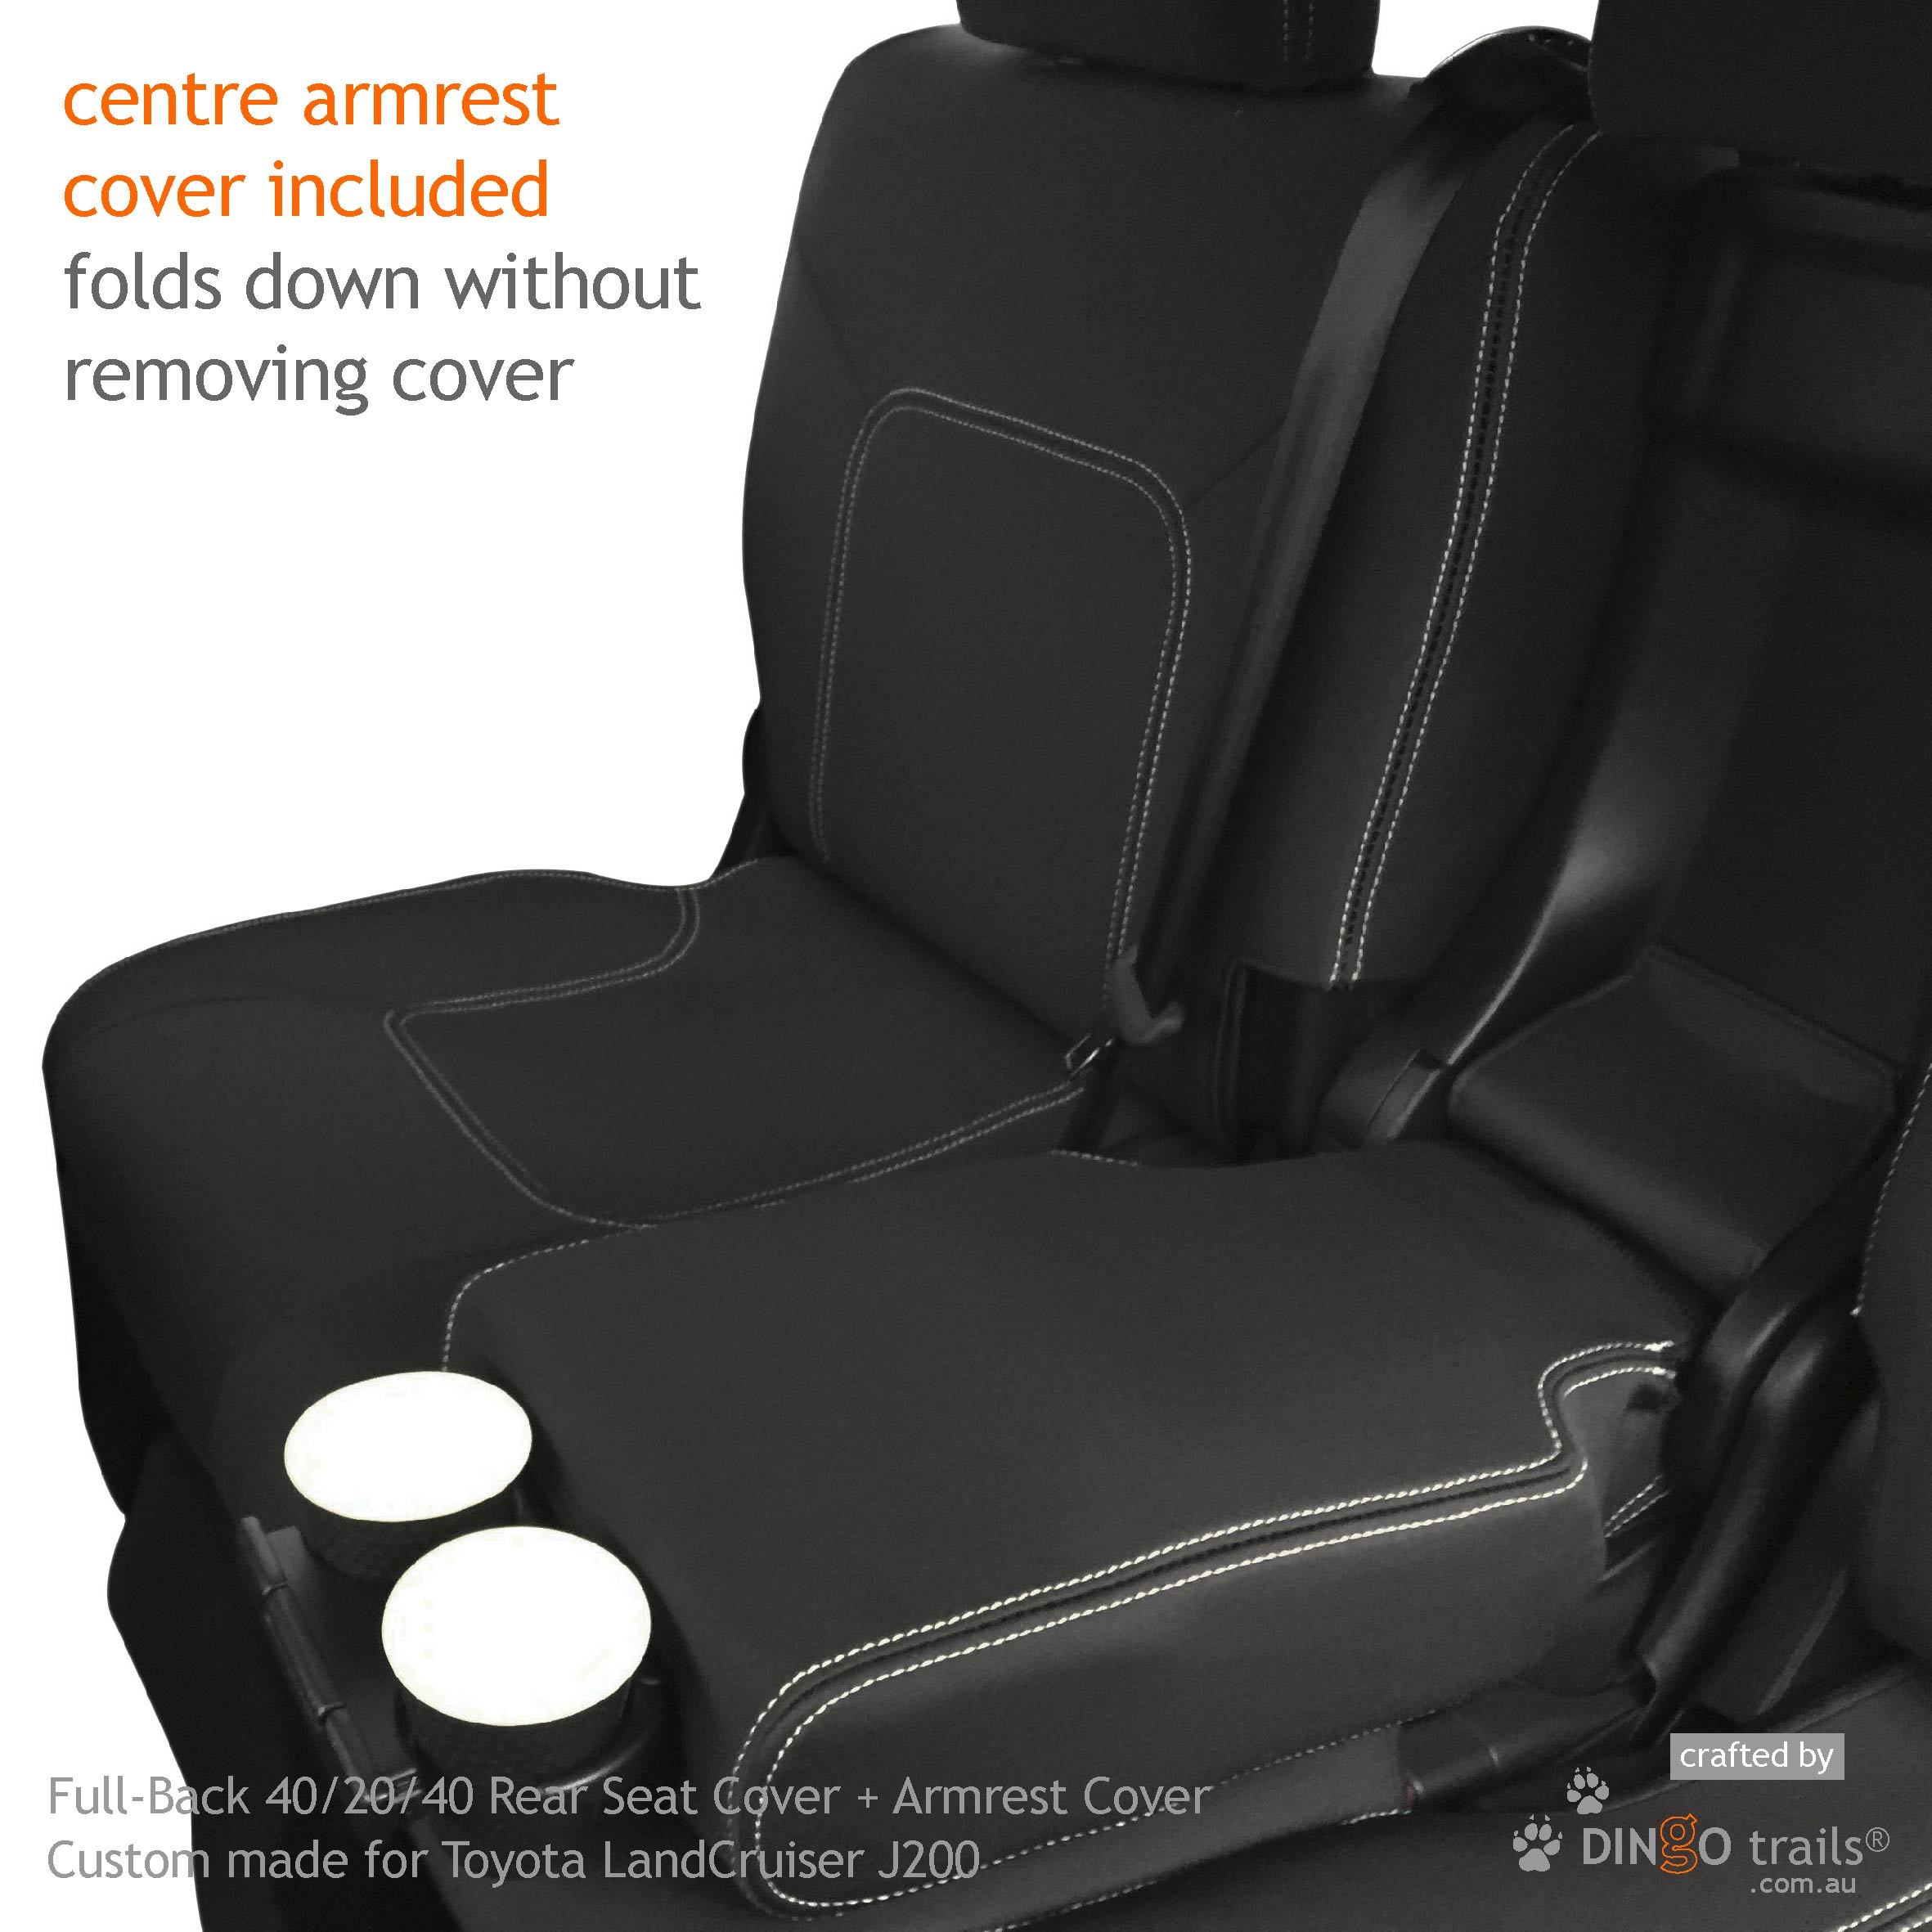 FRONT Seat Covers Toyota Landcruiser 200 Series VX Premium Neoprene Waterproof